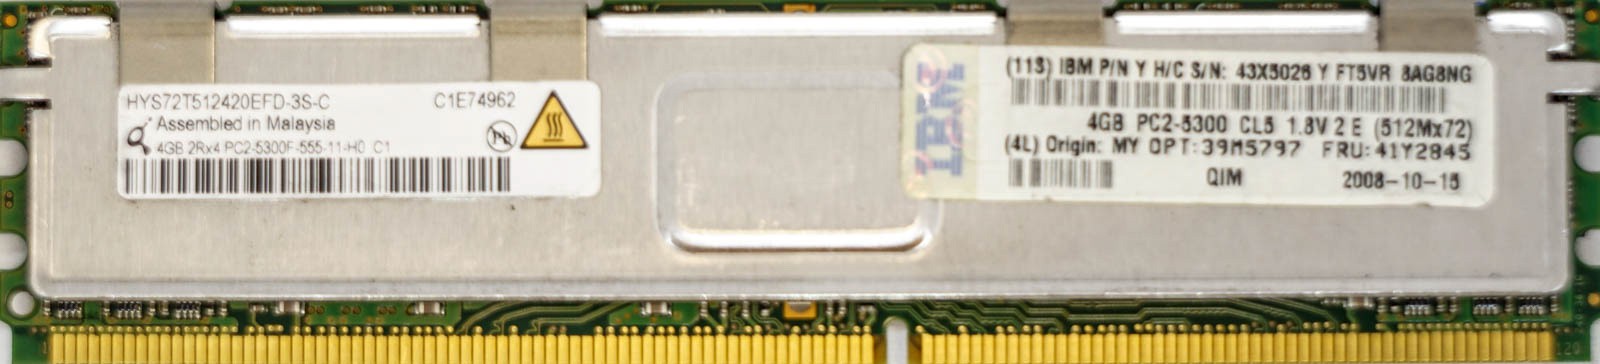 IBM (43X5026) - 4GB PC2-5300F (DDR2-667Mhz, 2RX4)